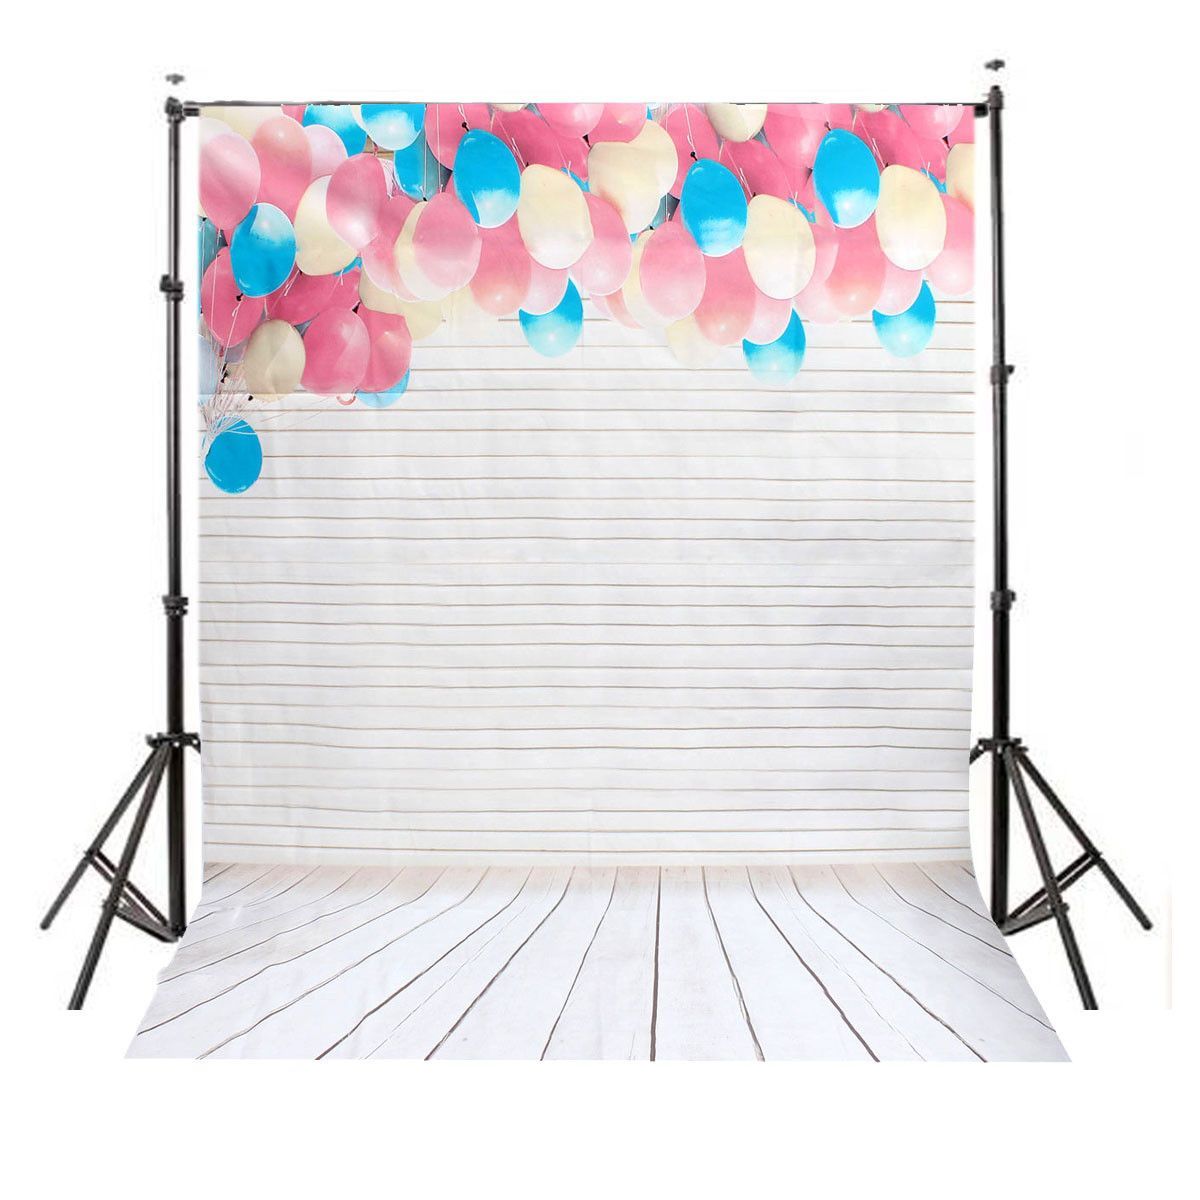 MOHOO-5x7FT-Colorful-Balloon-Wood-Floor-Silk-Backdrop-Photography-Background-Studio-Prop-1323653